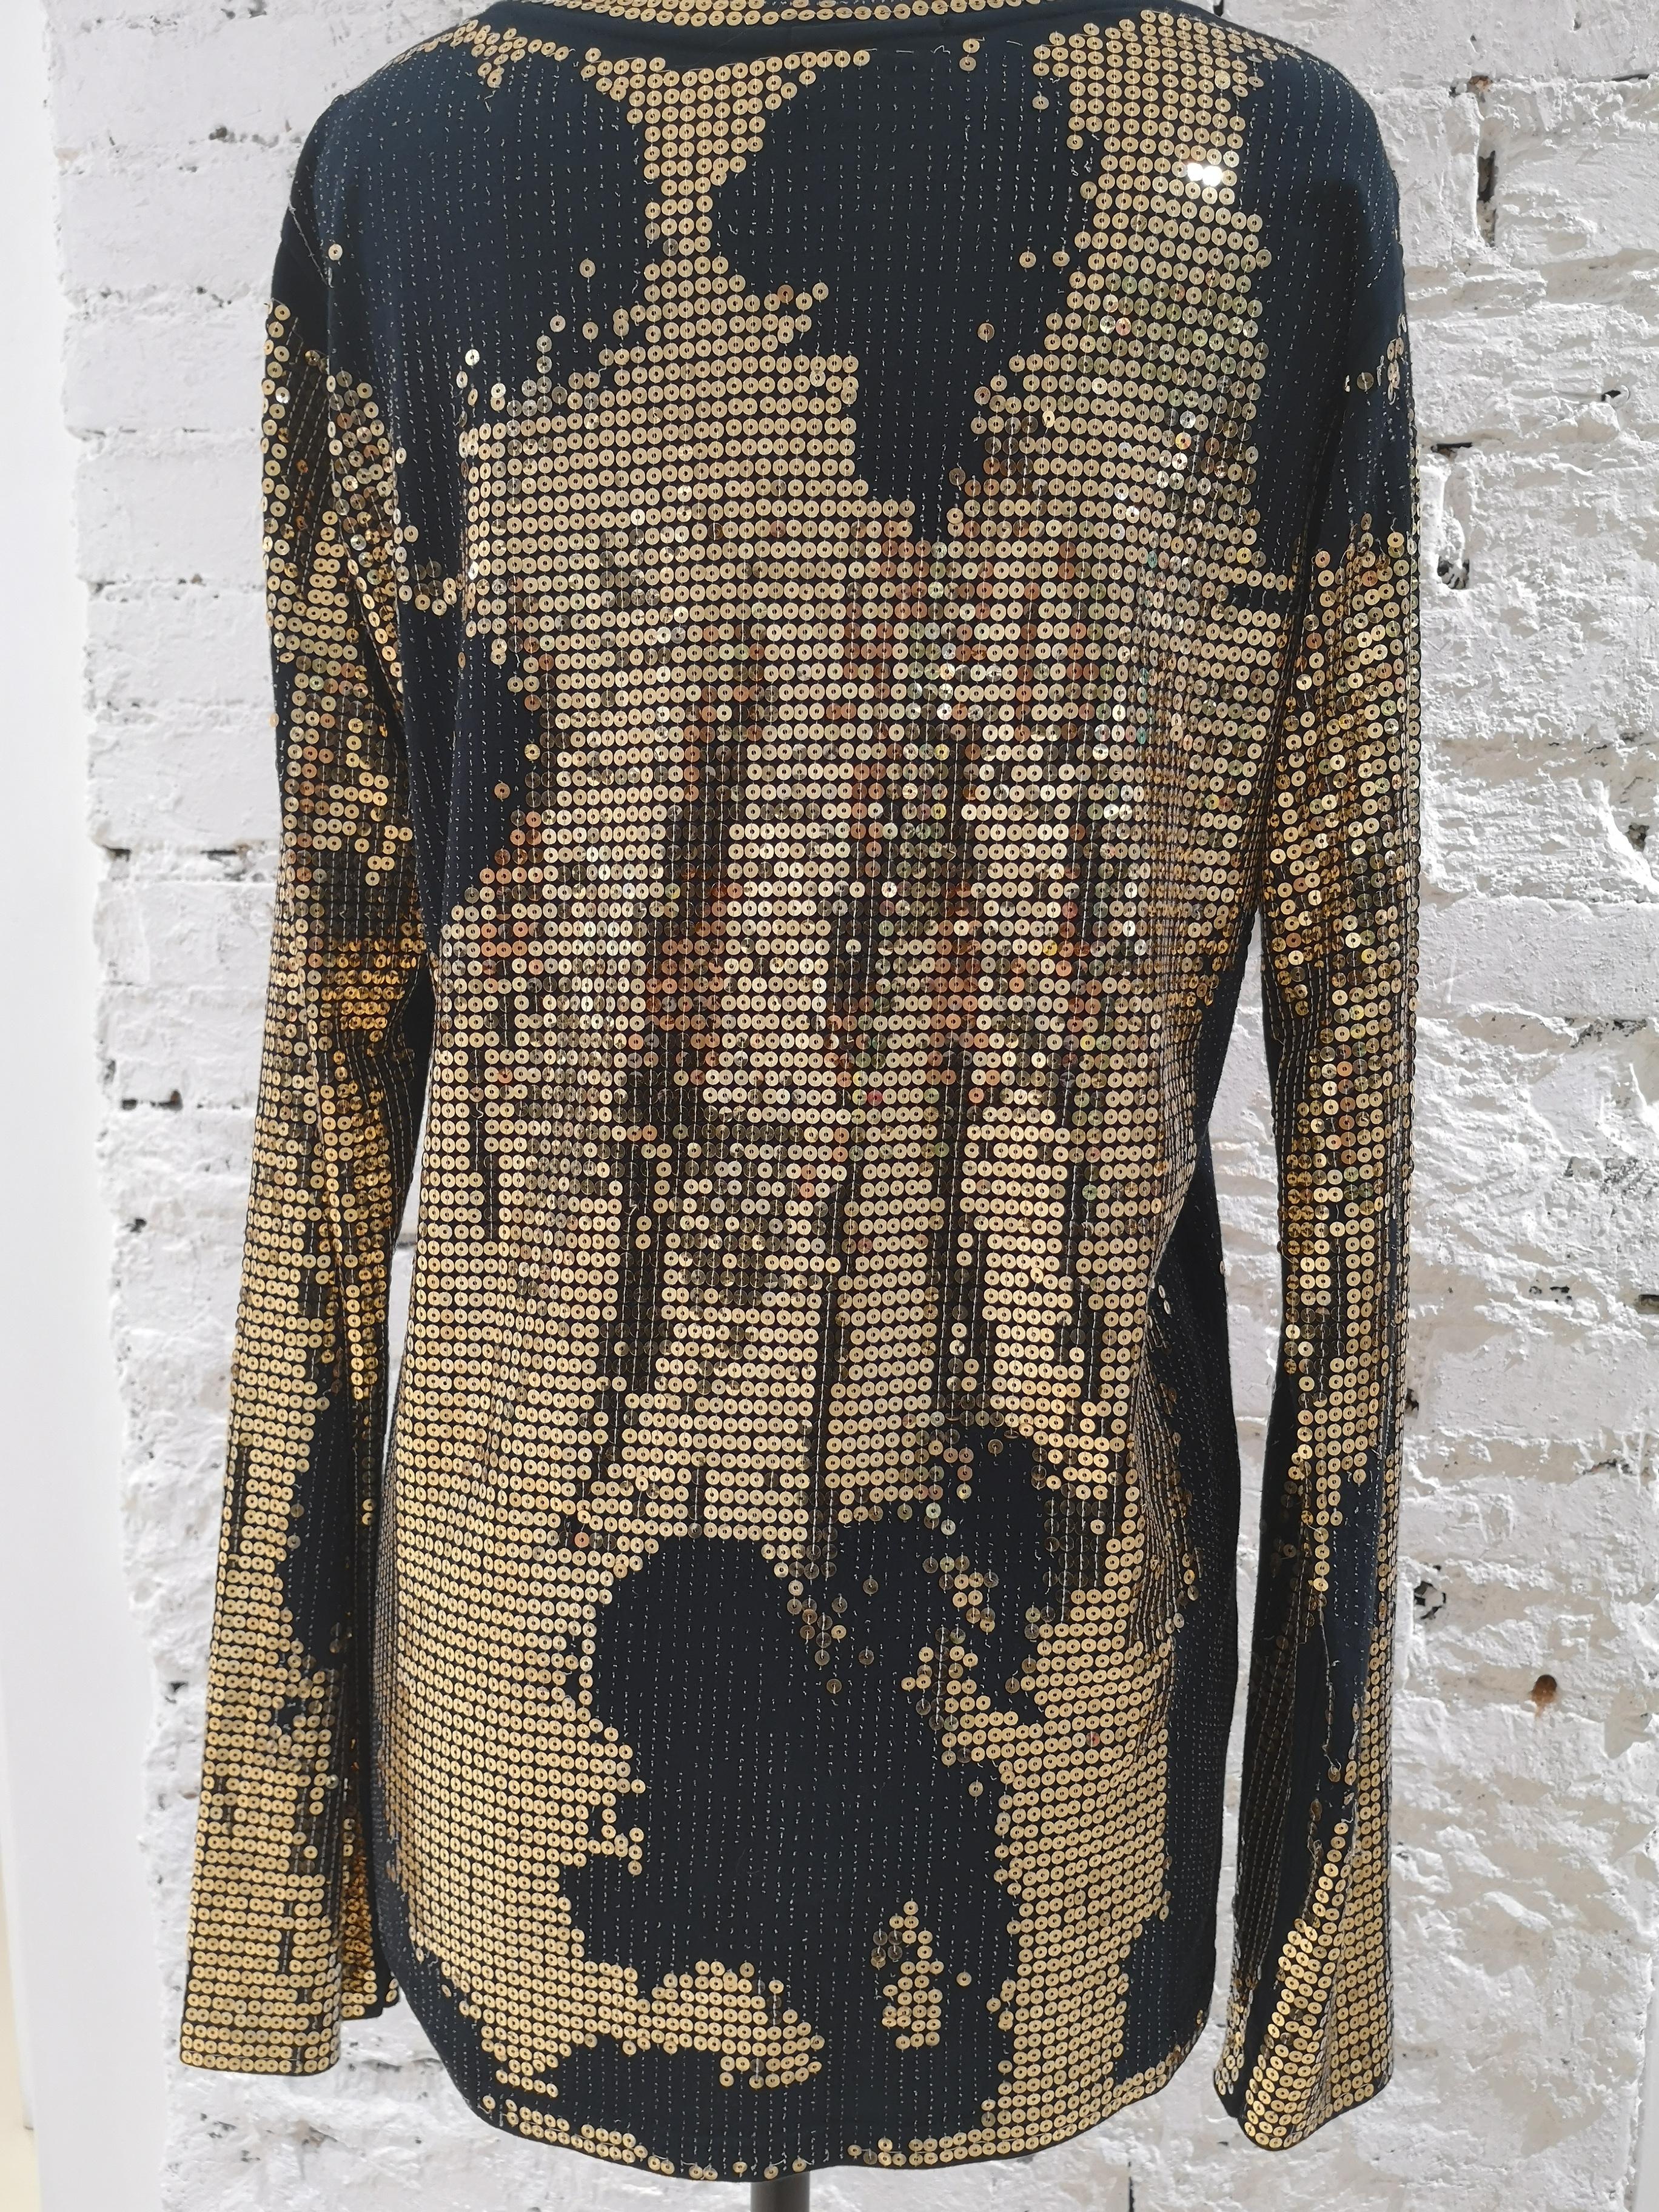 Balmain Black Gold Sequins Dress
size Small
total lenght 76 cm